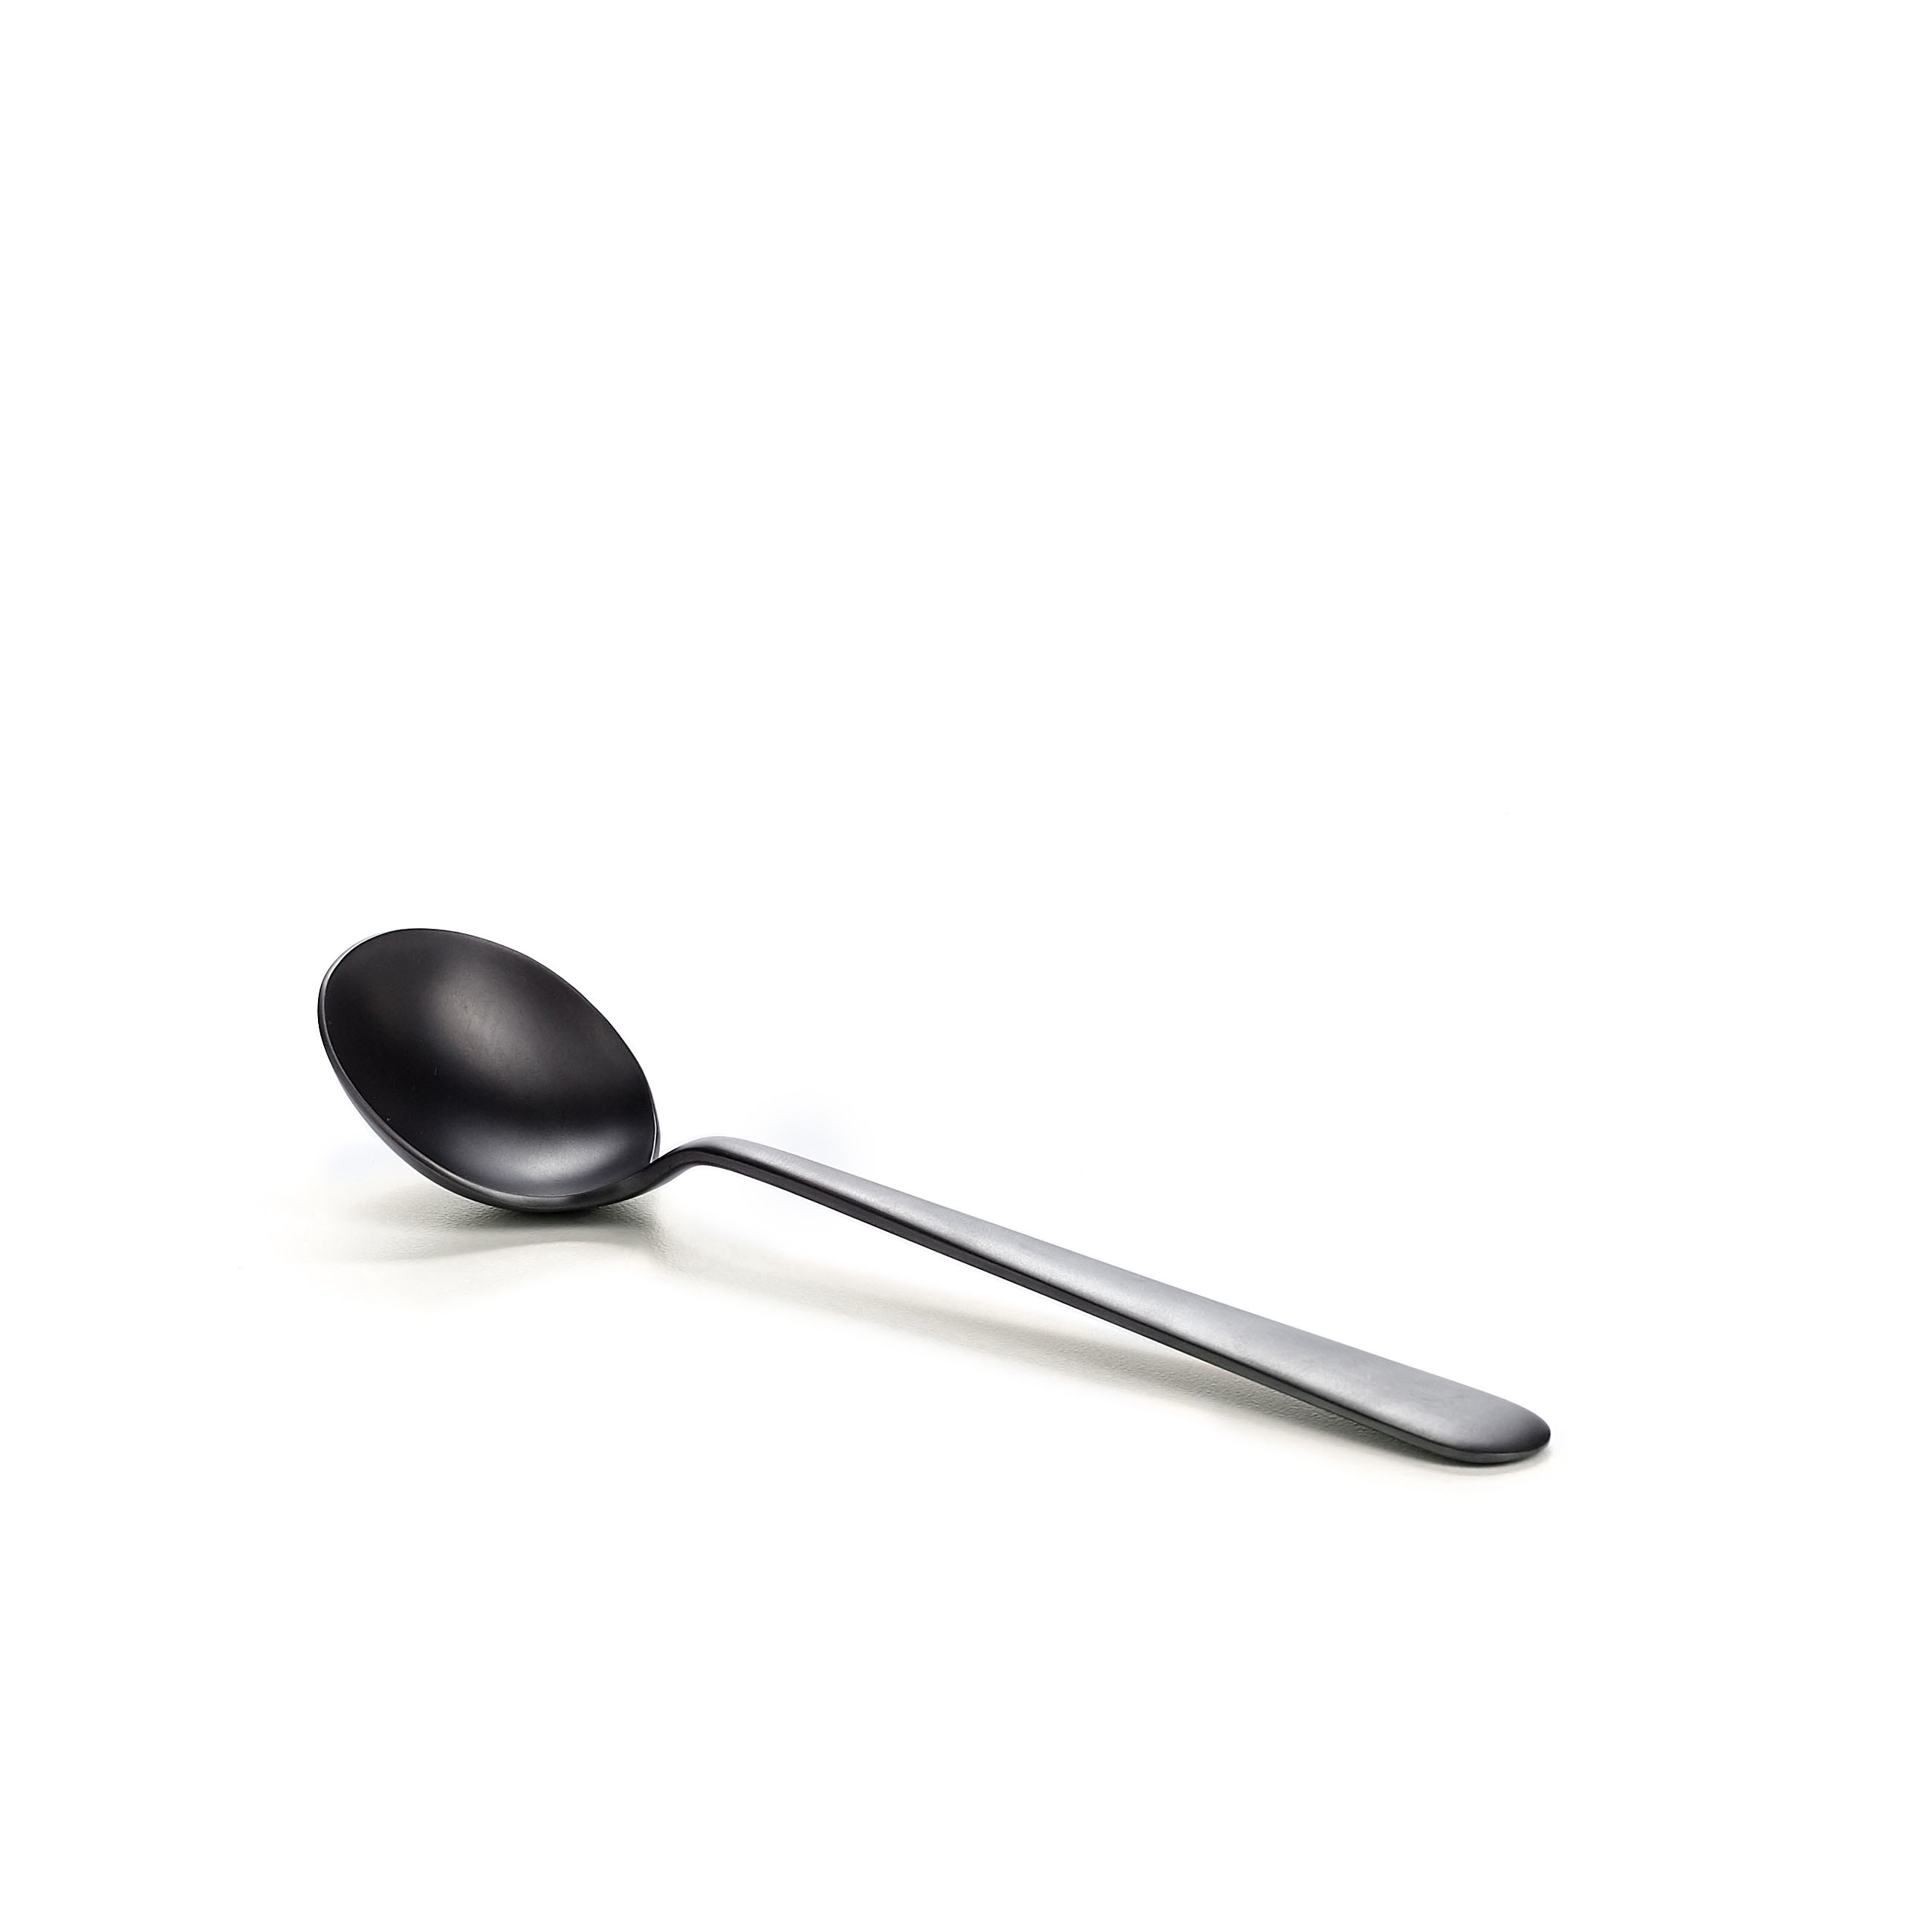 https://cdn11.bigcommerce.com/s-6h7ychjk4/images/stencil/original/products/8176/89288/hario-kasuya-cupping-spoon-matte-black-angle__25320.1597181749.jpg?c=1